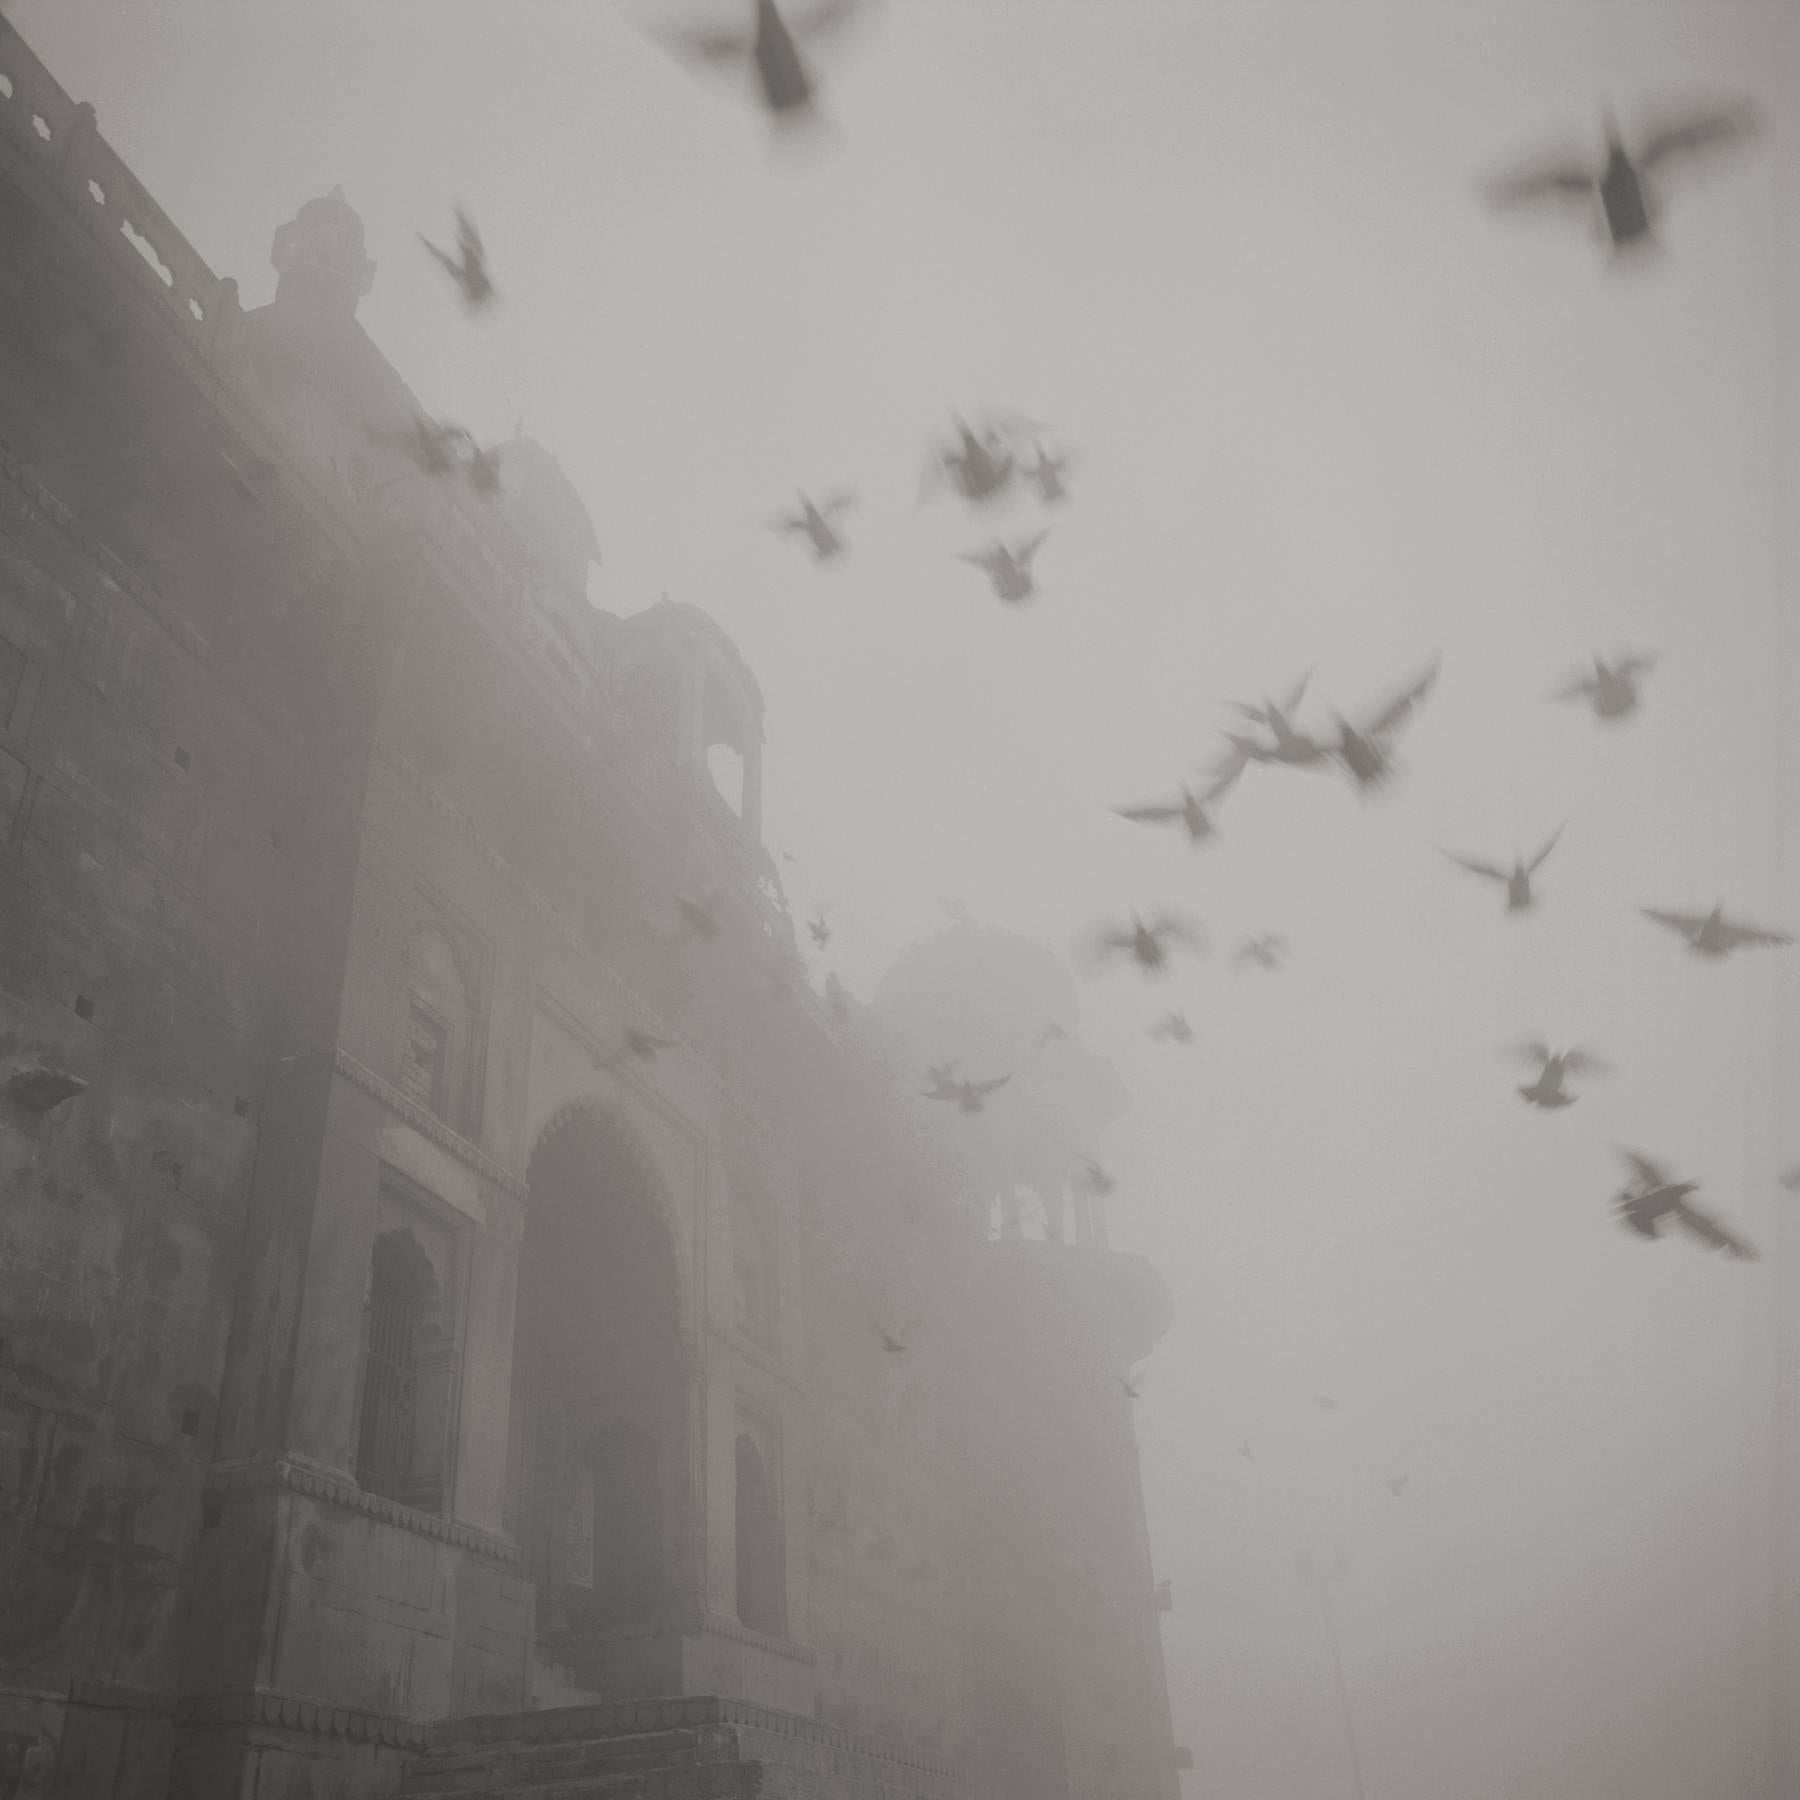 Kenro Izu Black and White Photograph - Eternal Light 519 #8, Varanasi, India